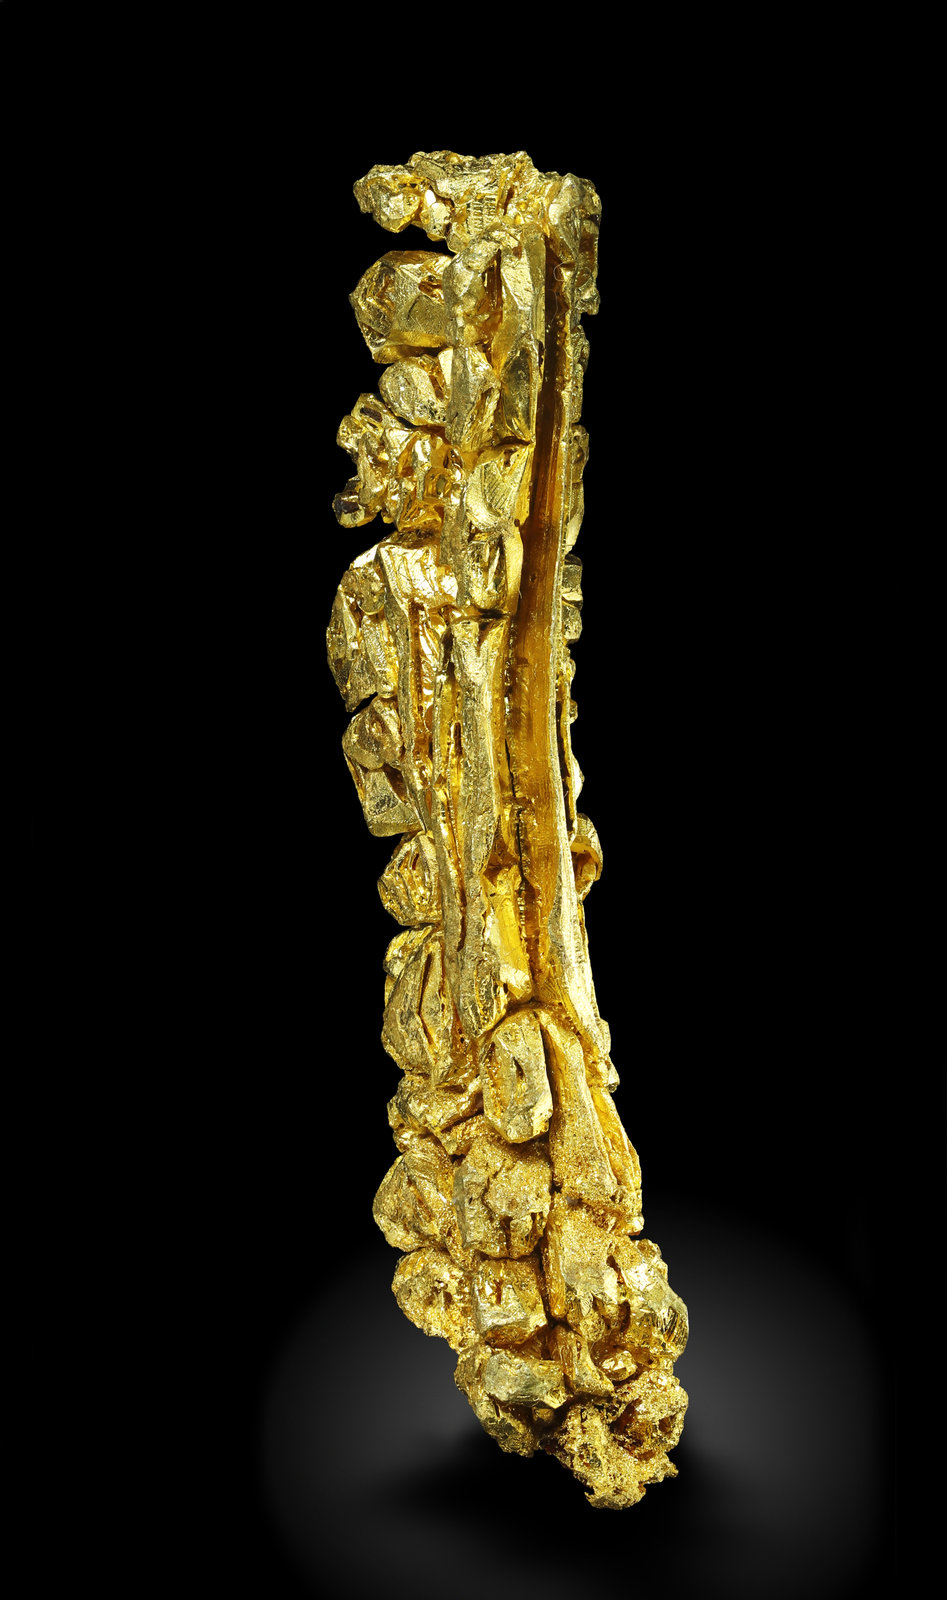 specimens/s_imagesAM5/Gold-MJ68AM5_0587_r.jpg